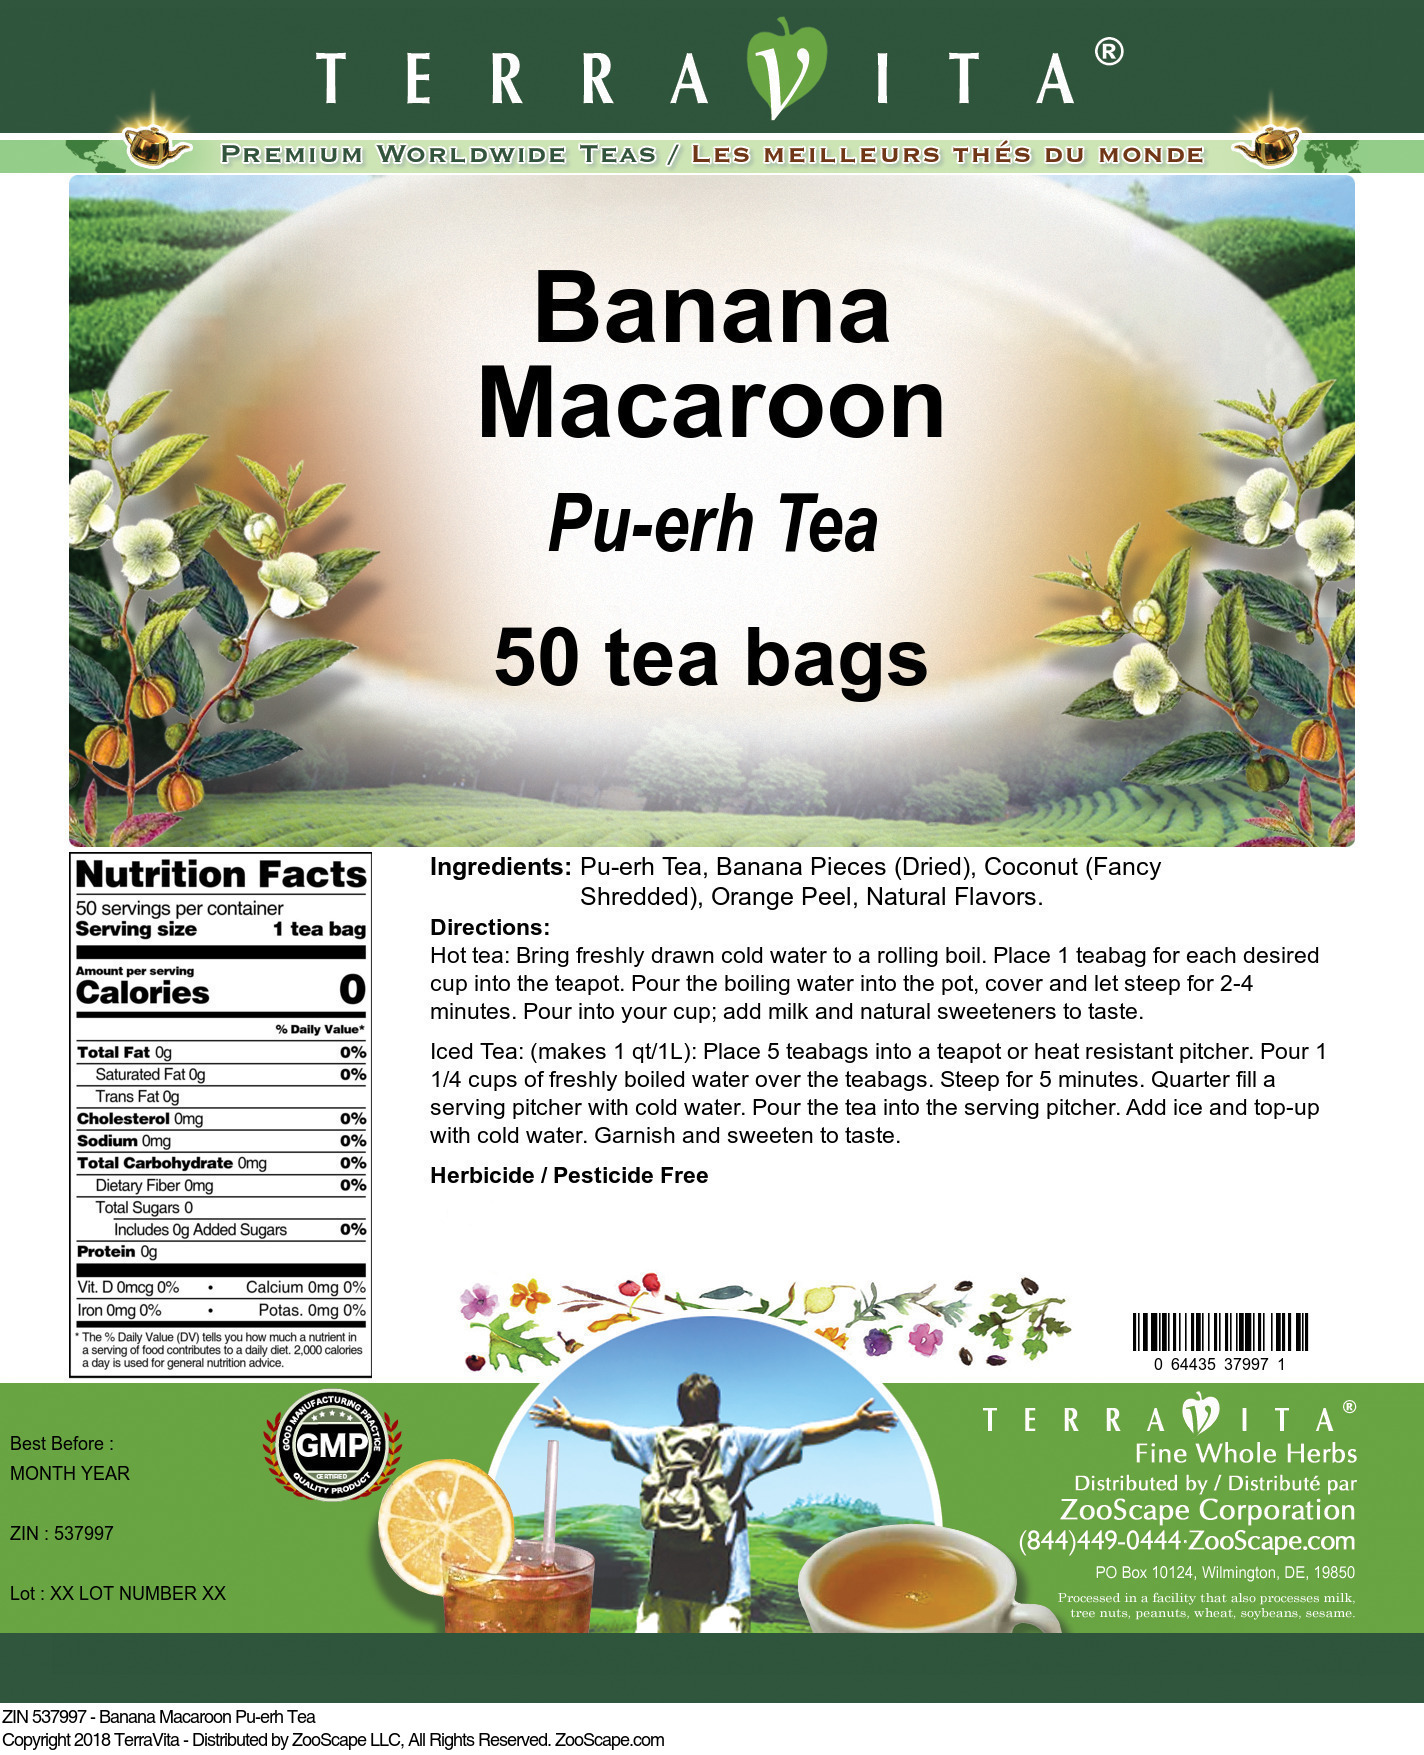 Banana Macaroon Pu-erh Tea - Label